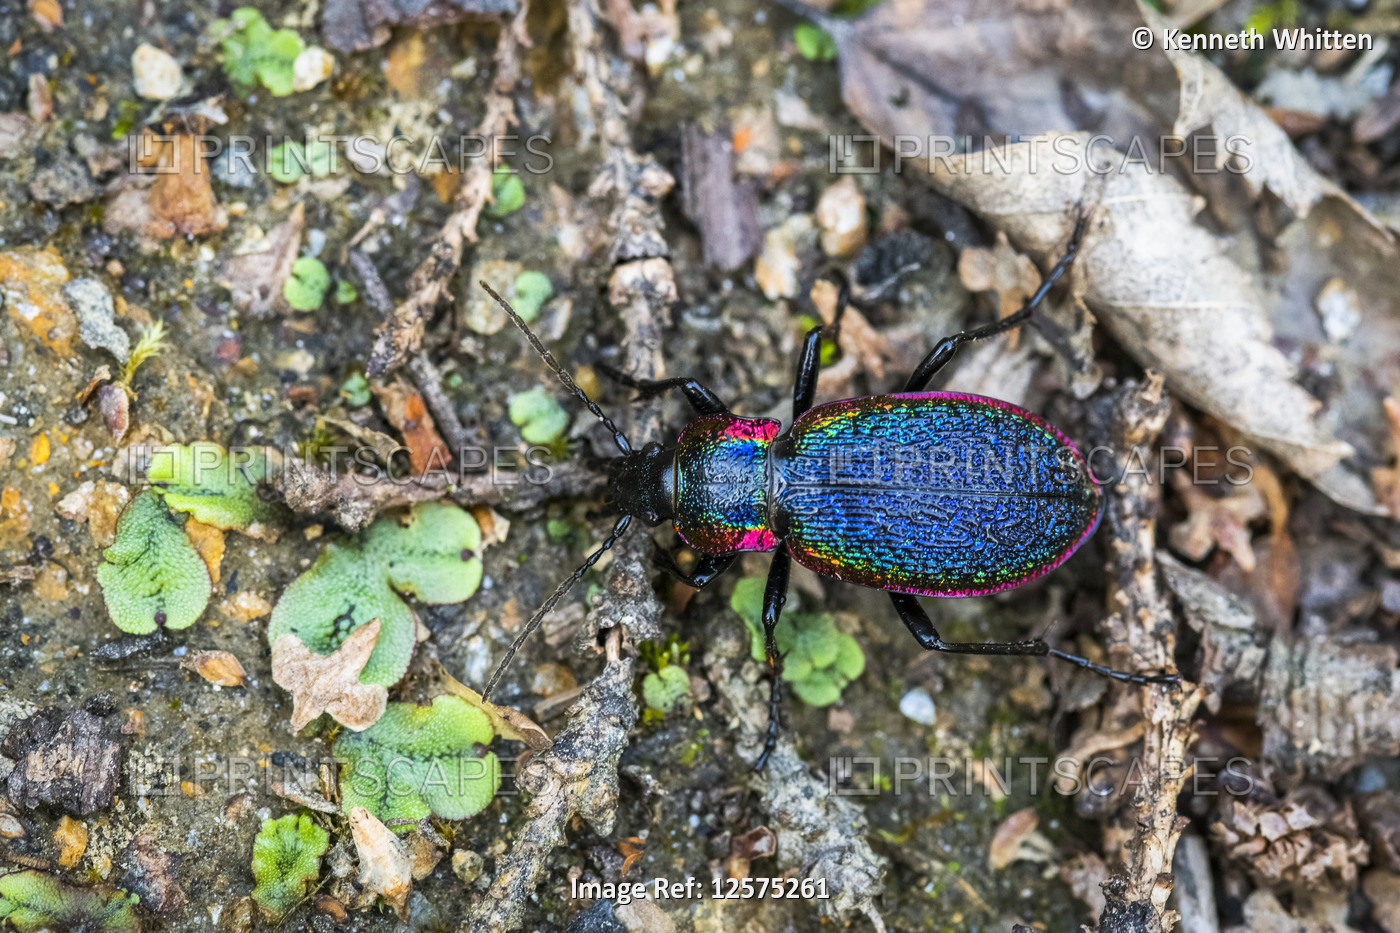 Iridescent-coloured Rainbow Beetle